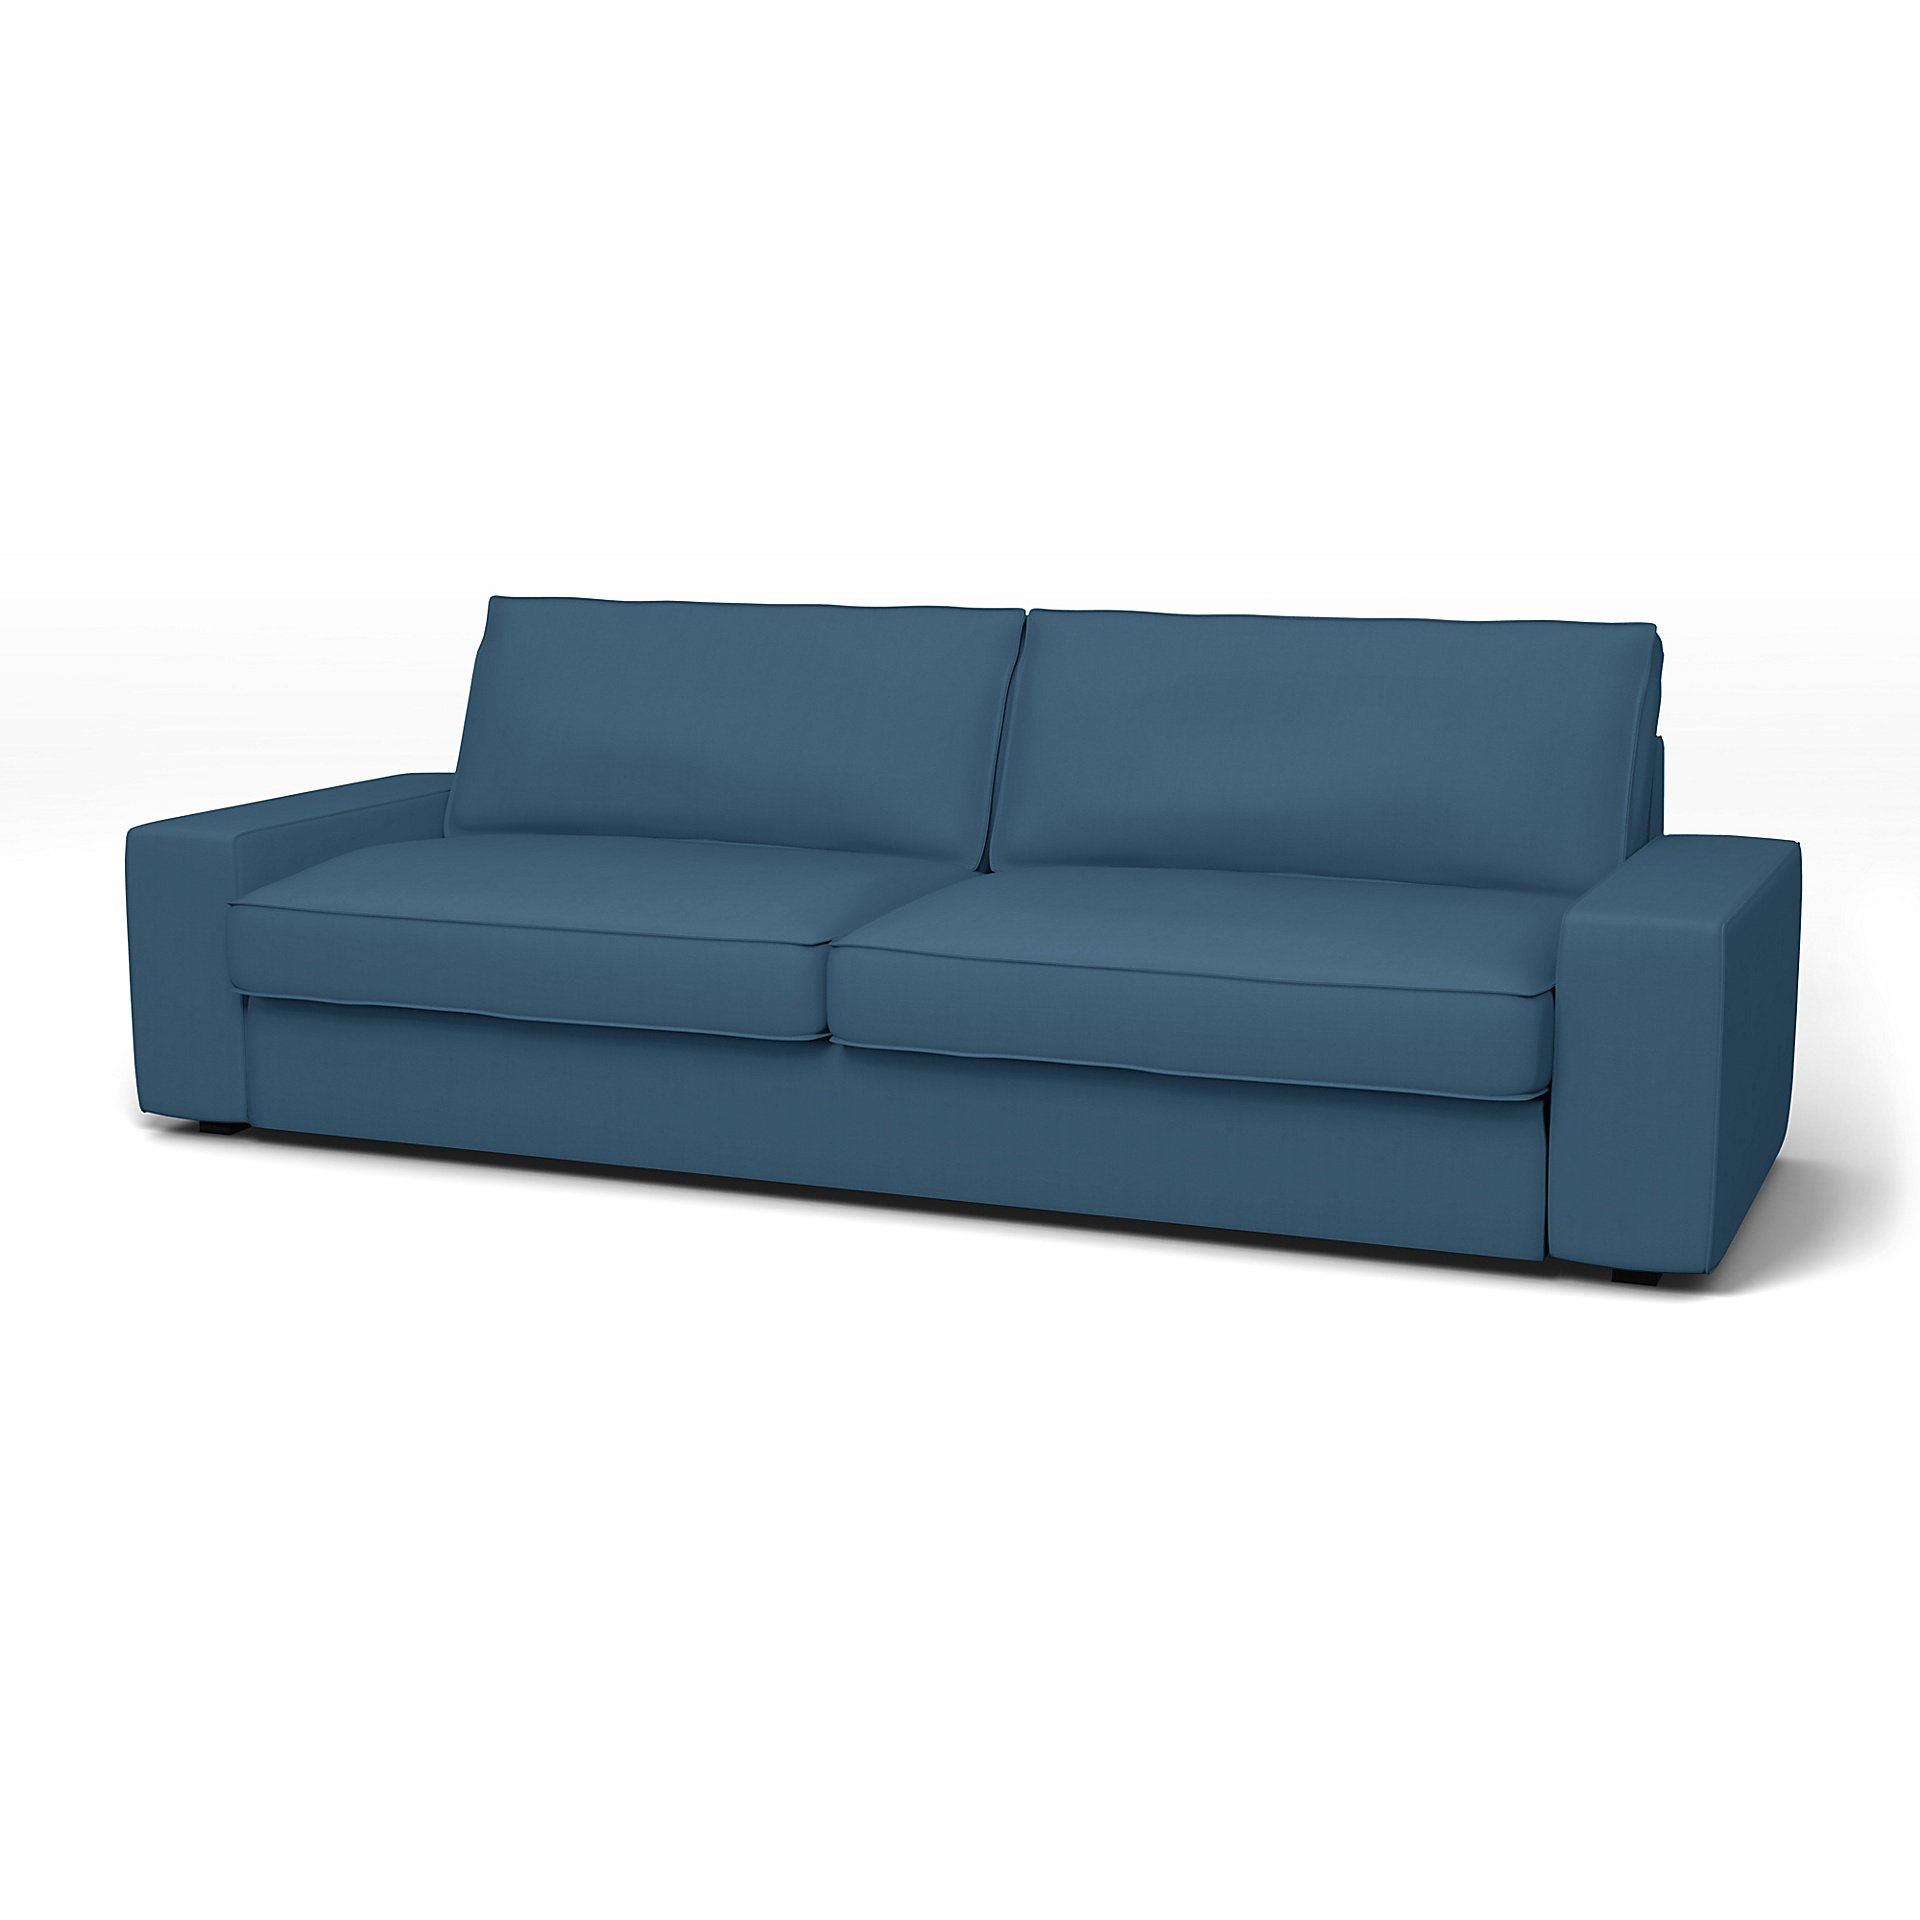 IKEA - Kivik Sofa Bed Cover, Real Teal, Cotton - Bemz